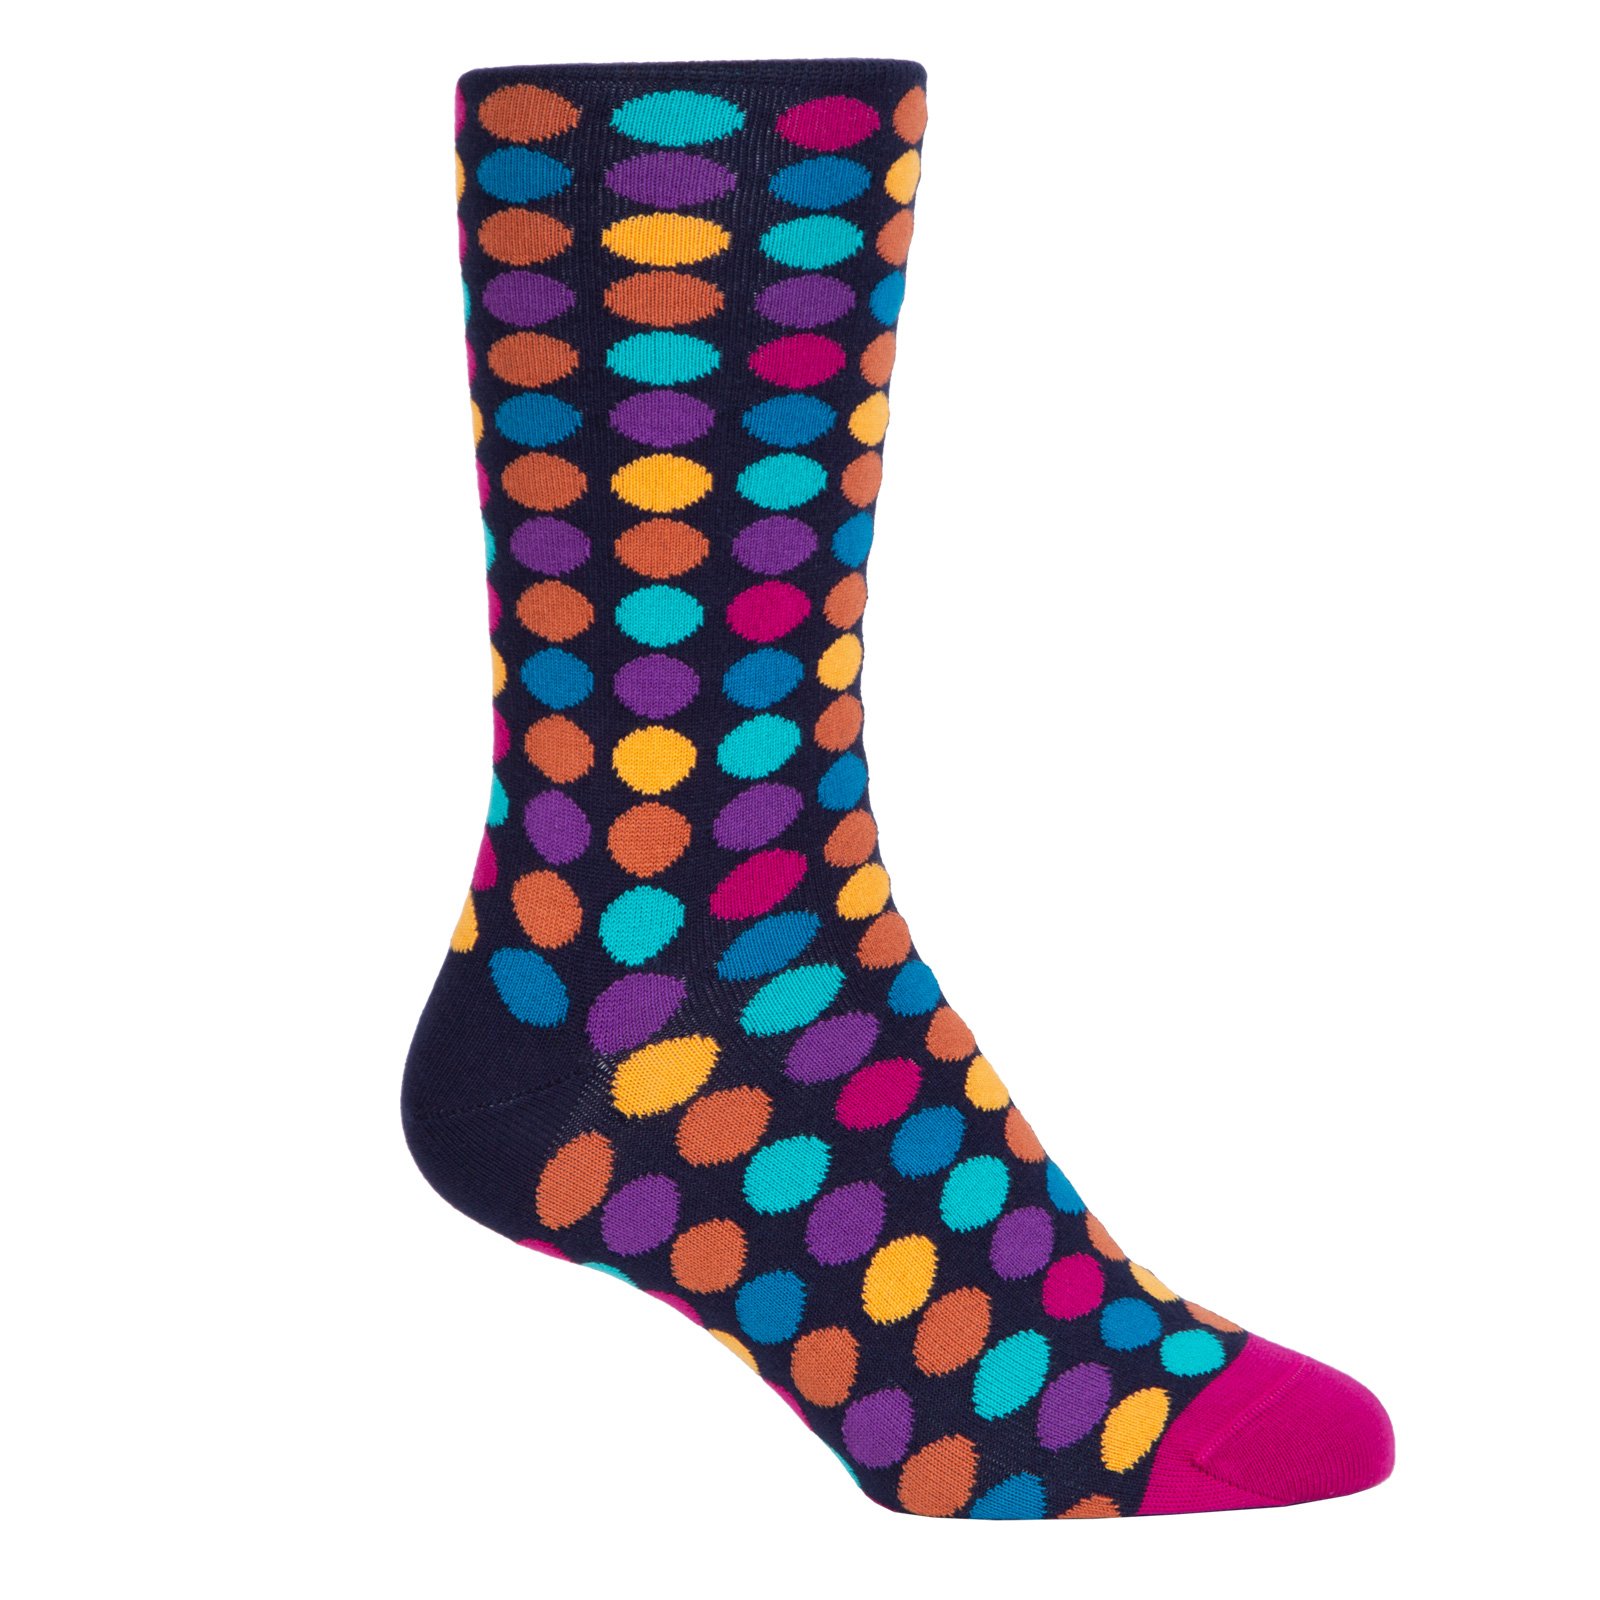 Daley Polka Dot Cotton Socks - New Online : Fifth Avenue Menswear ...